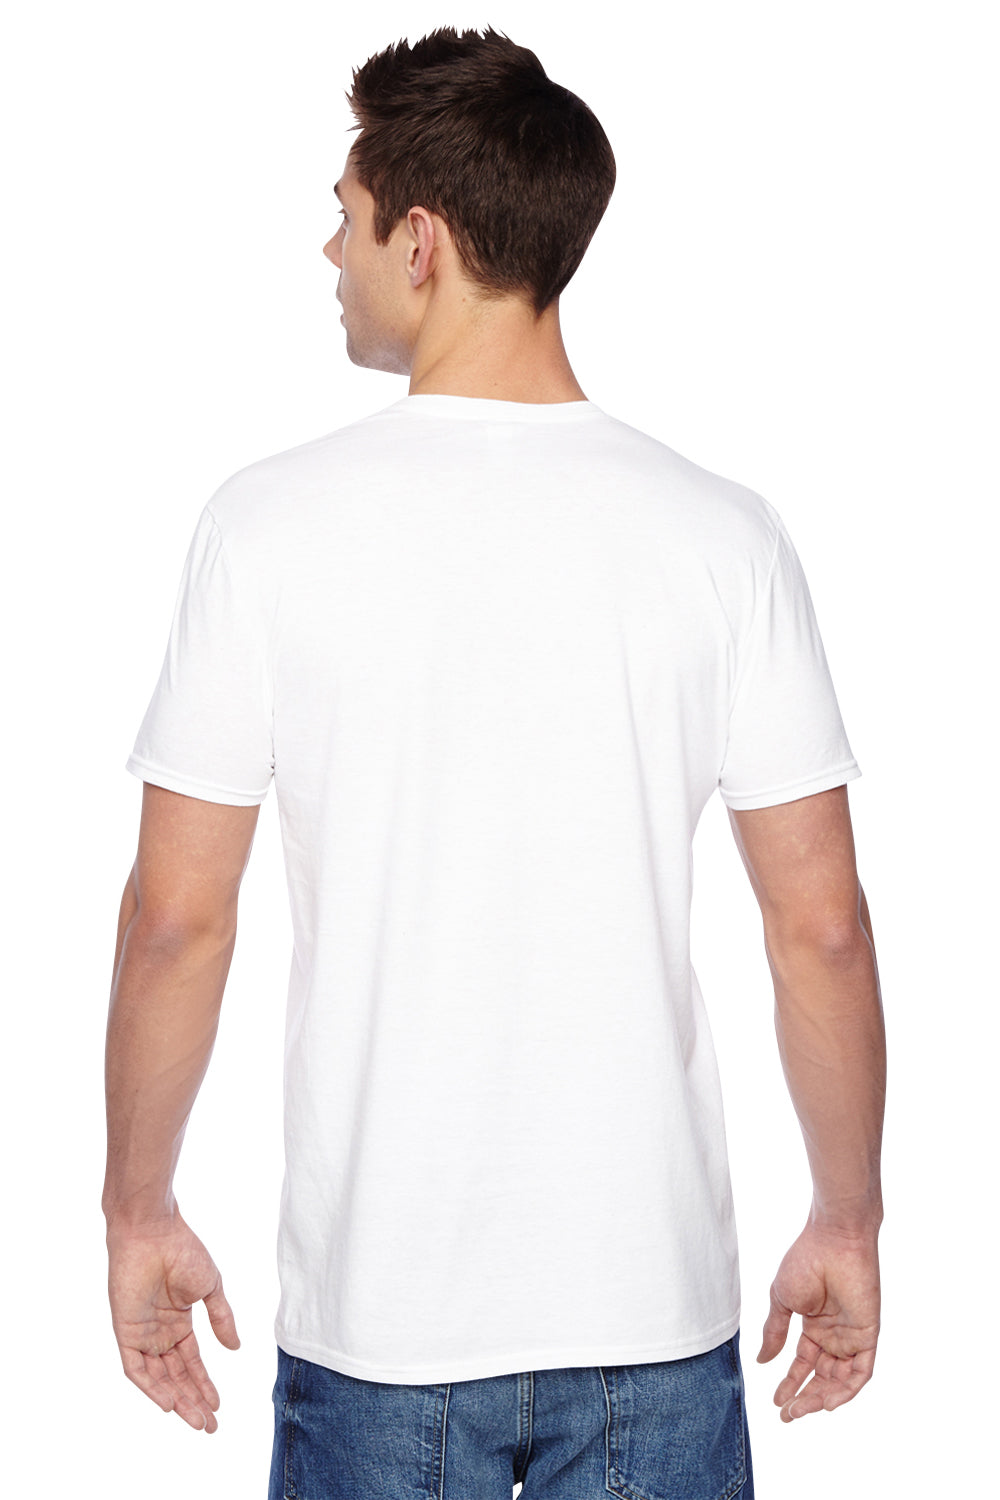 Fruit Of The Loom SF45R Mens Sofspun Jersey Short Sleeve Crewneck T-Shirt White Back